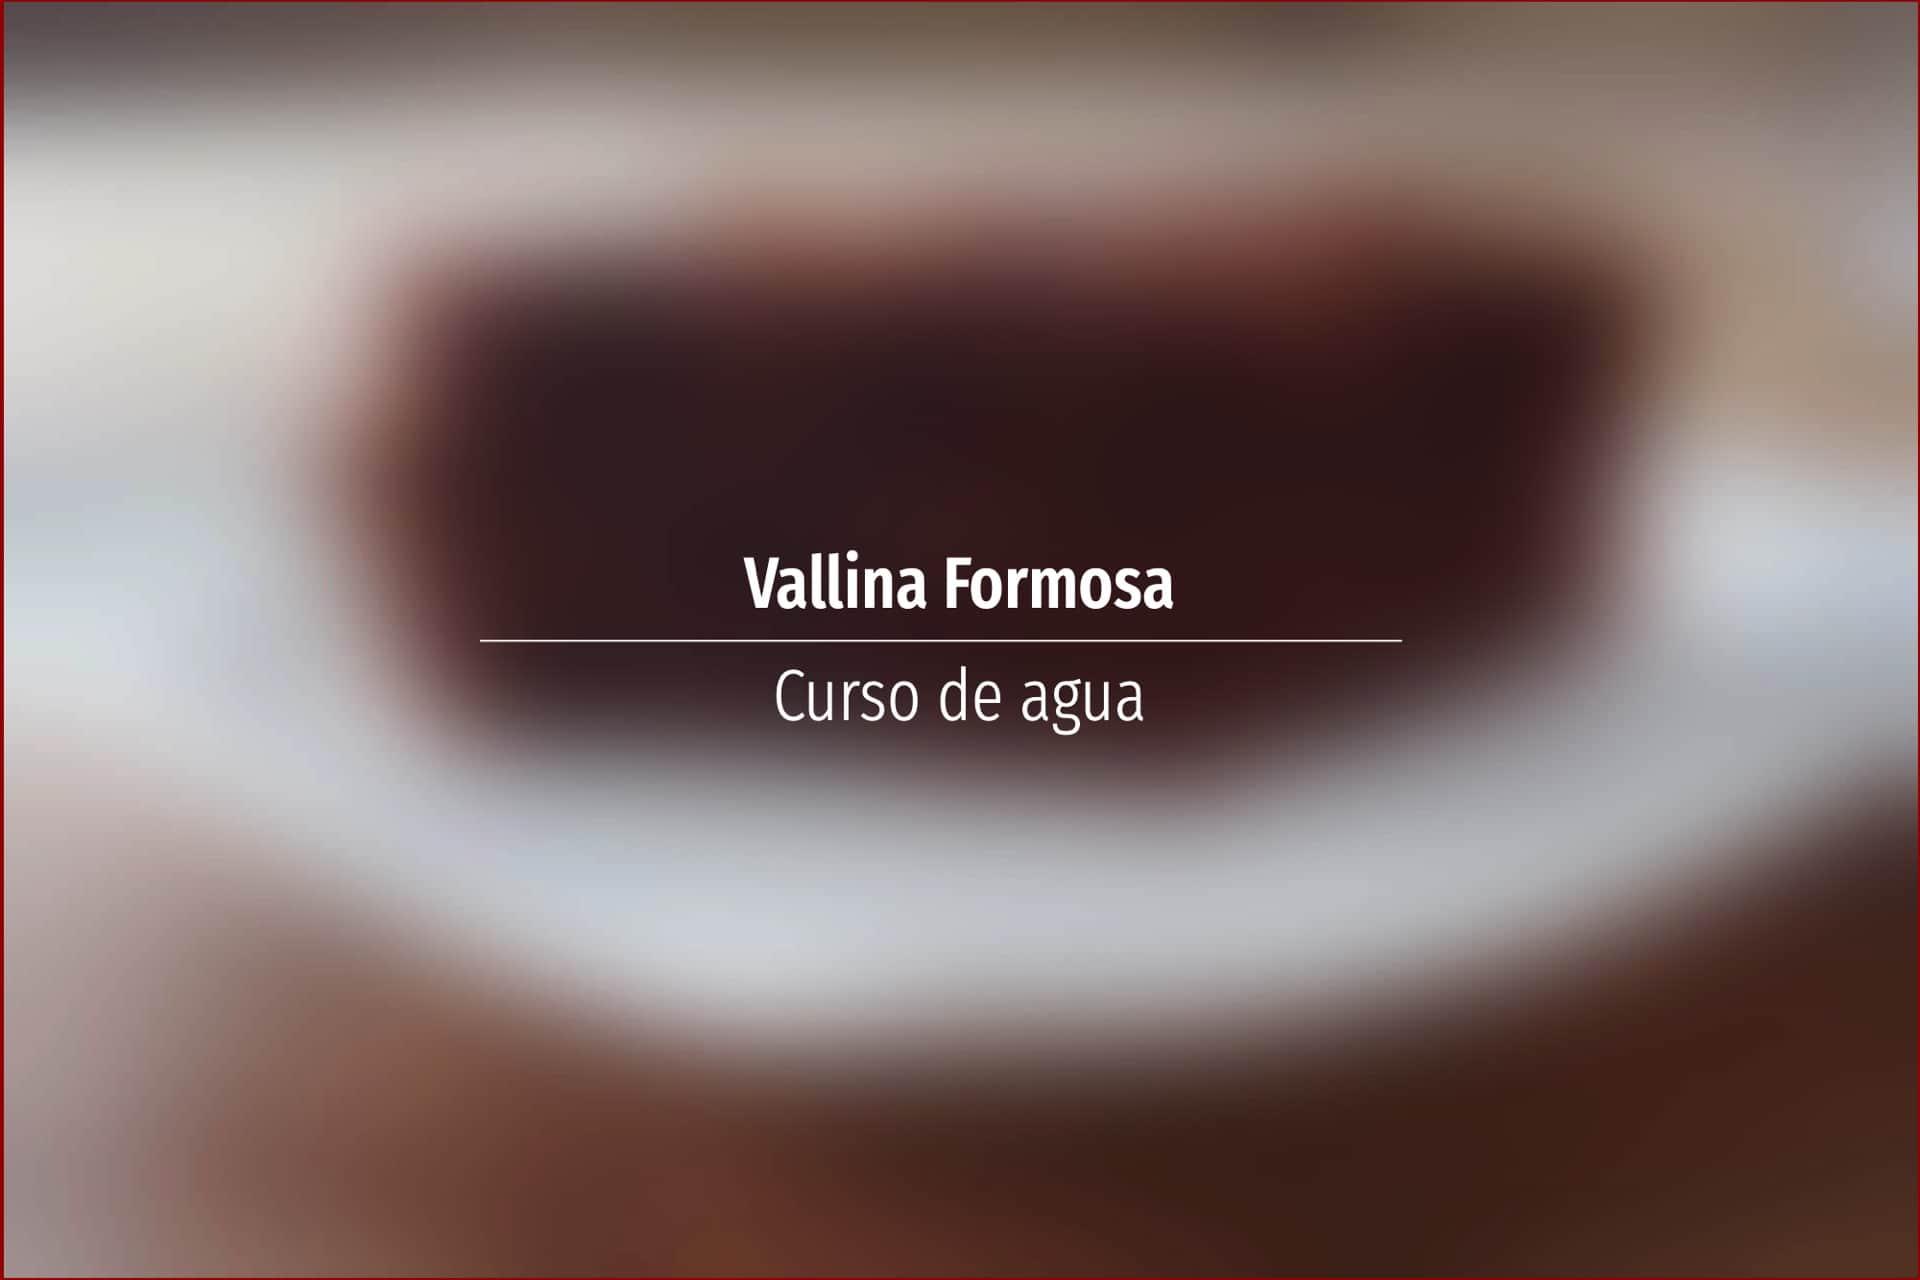 Vallina Formosa